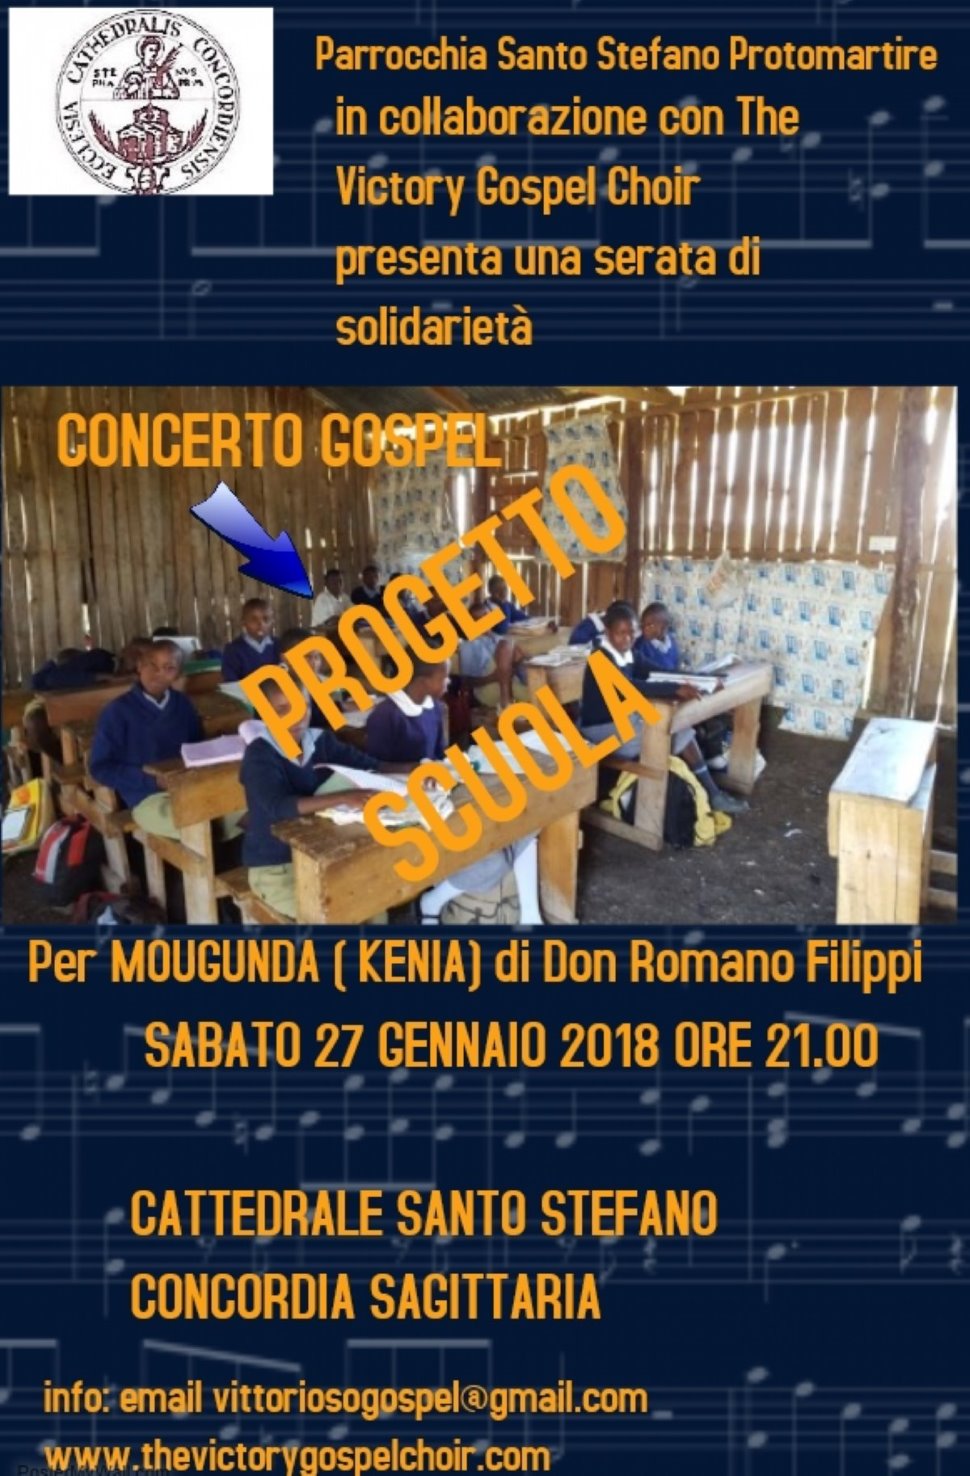 THE VICTORY GOSPEL CHOIR

Concerto Gospel " Progetto Scuola" per Mougunda ( KENIA)